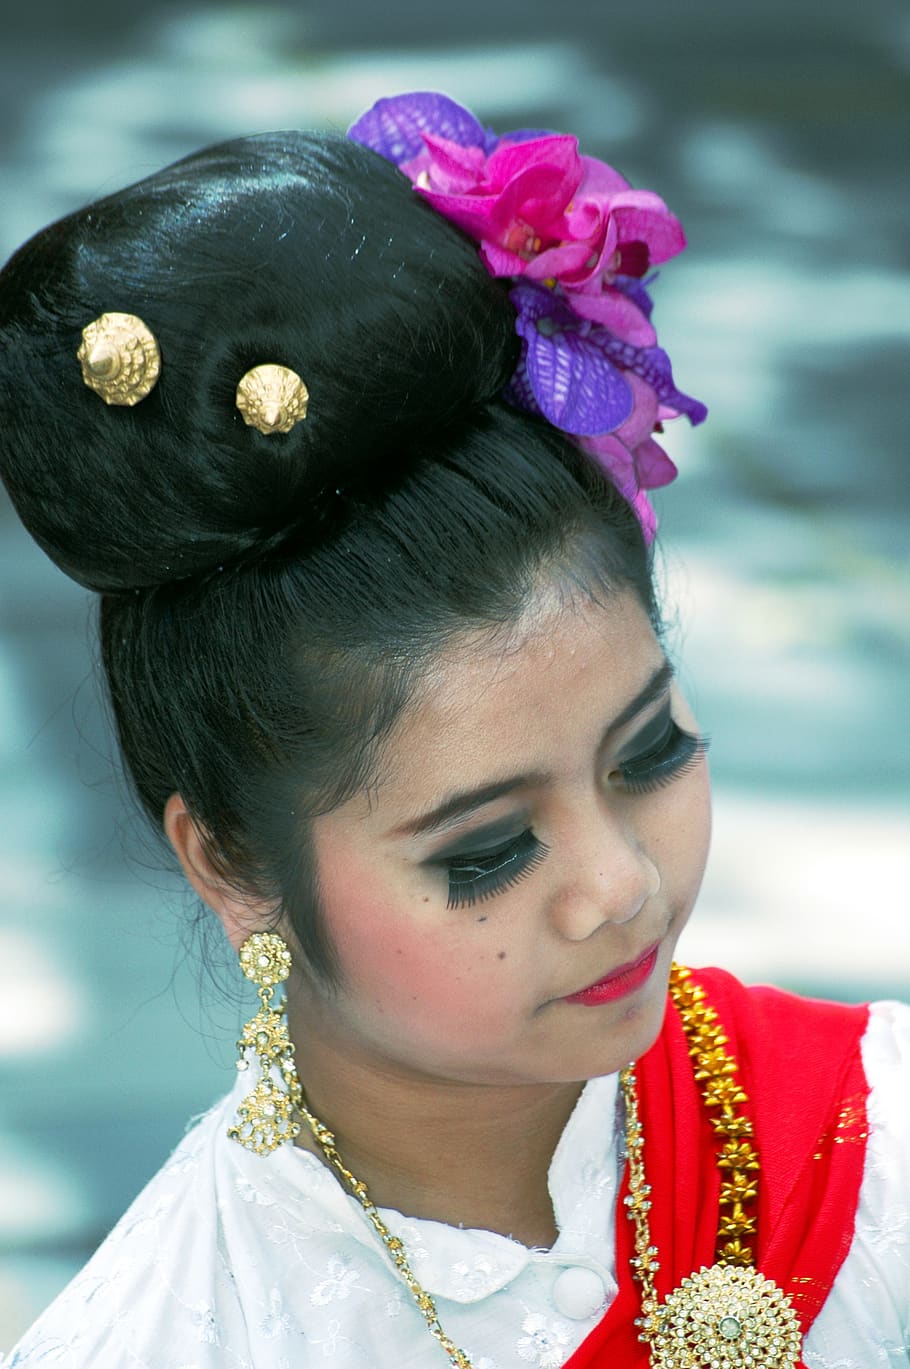 thailand, art, culture, girl, buddhism, dance, meditation, spiritual, religion, enlightenment